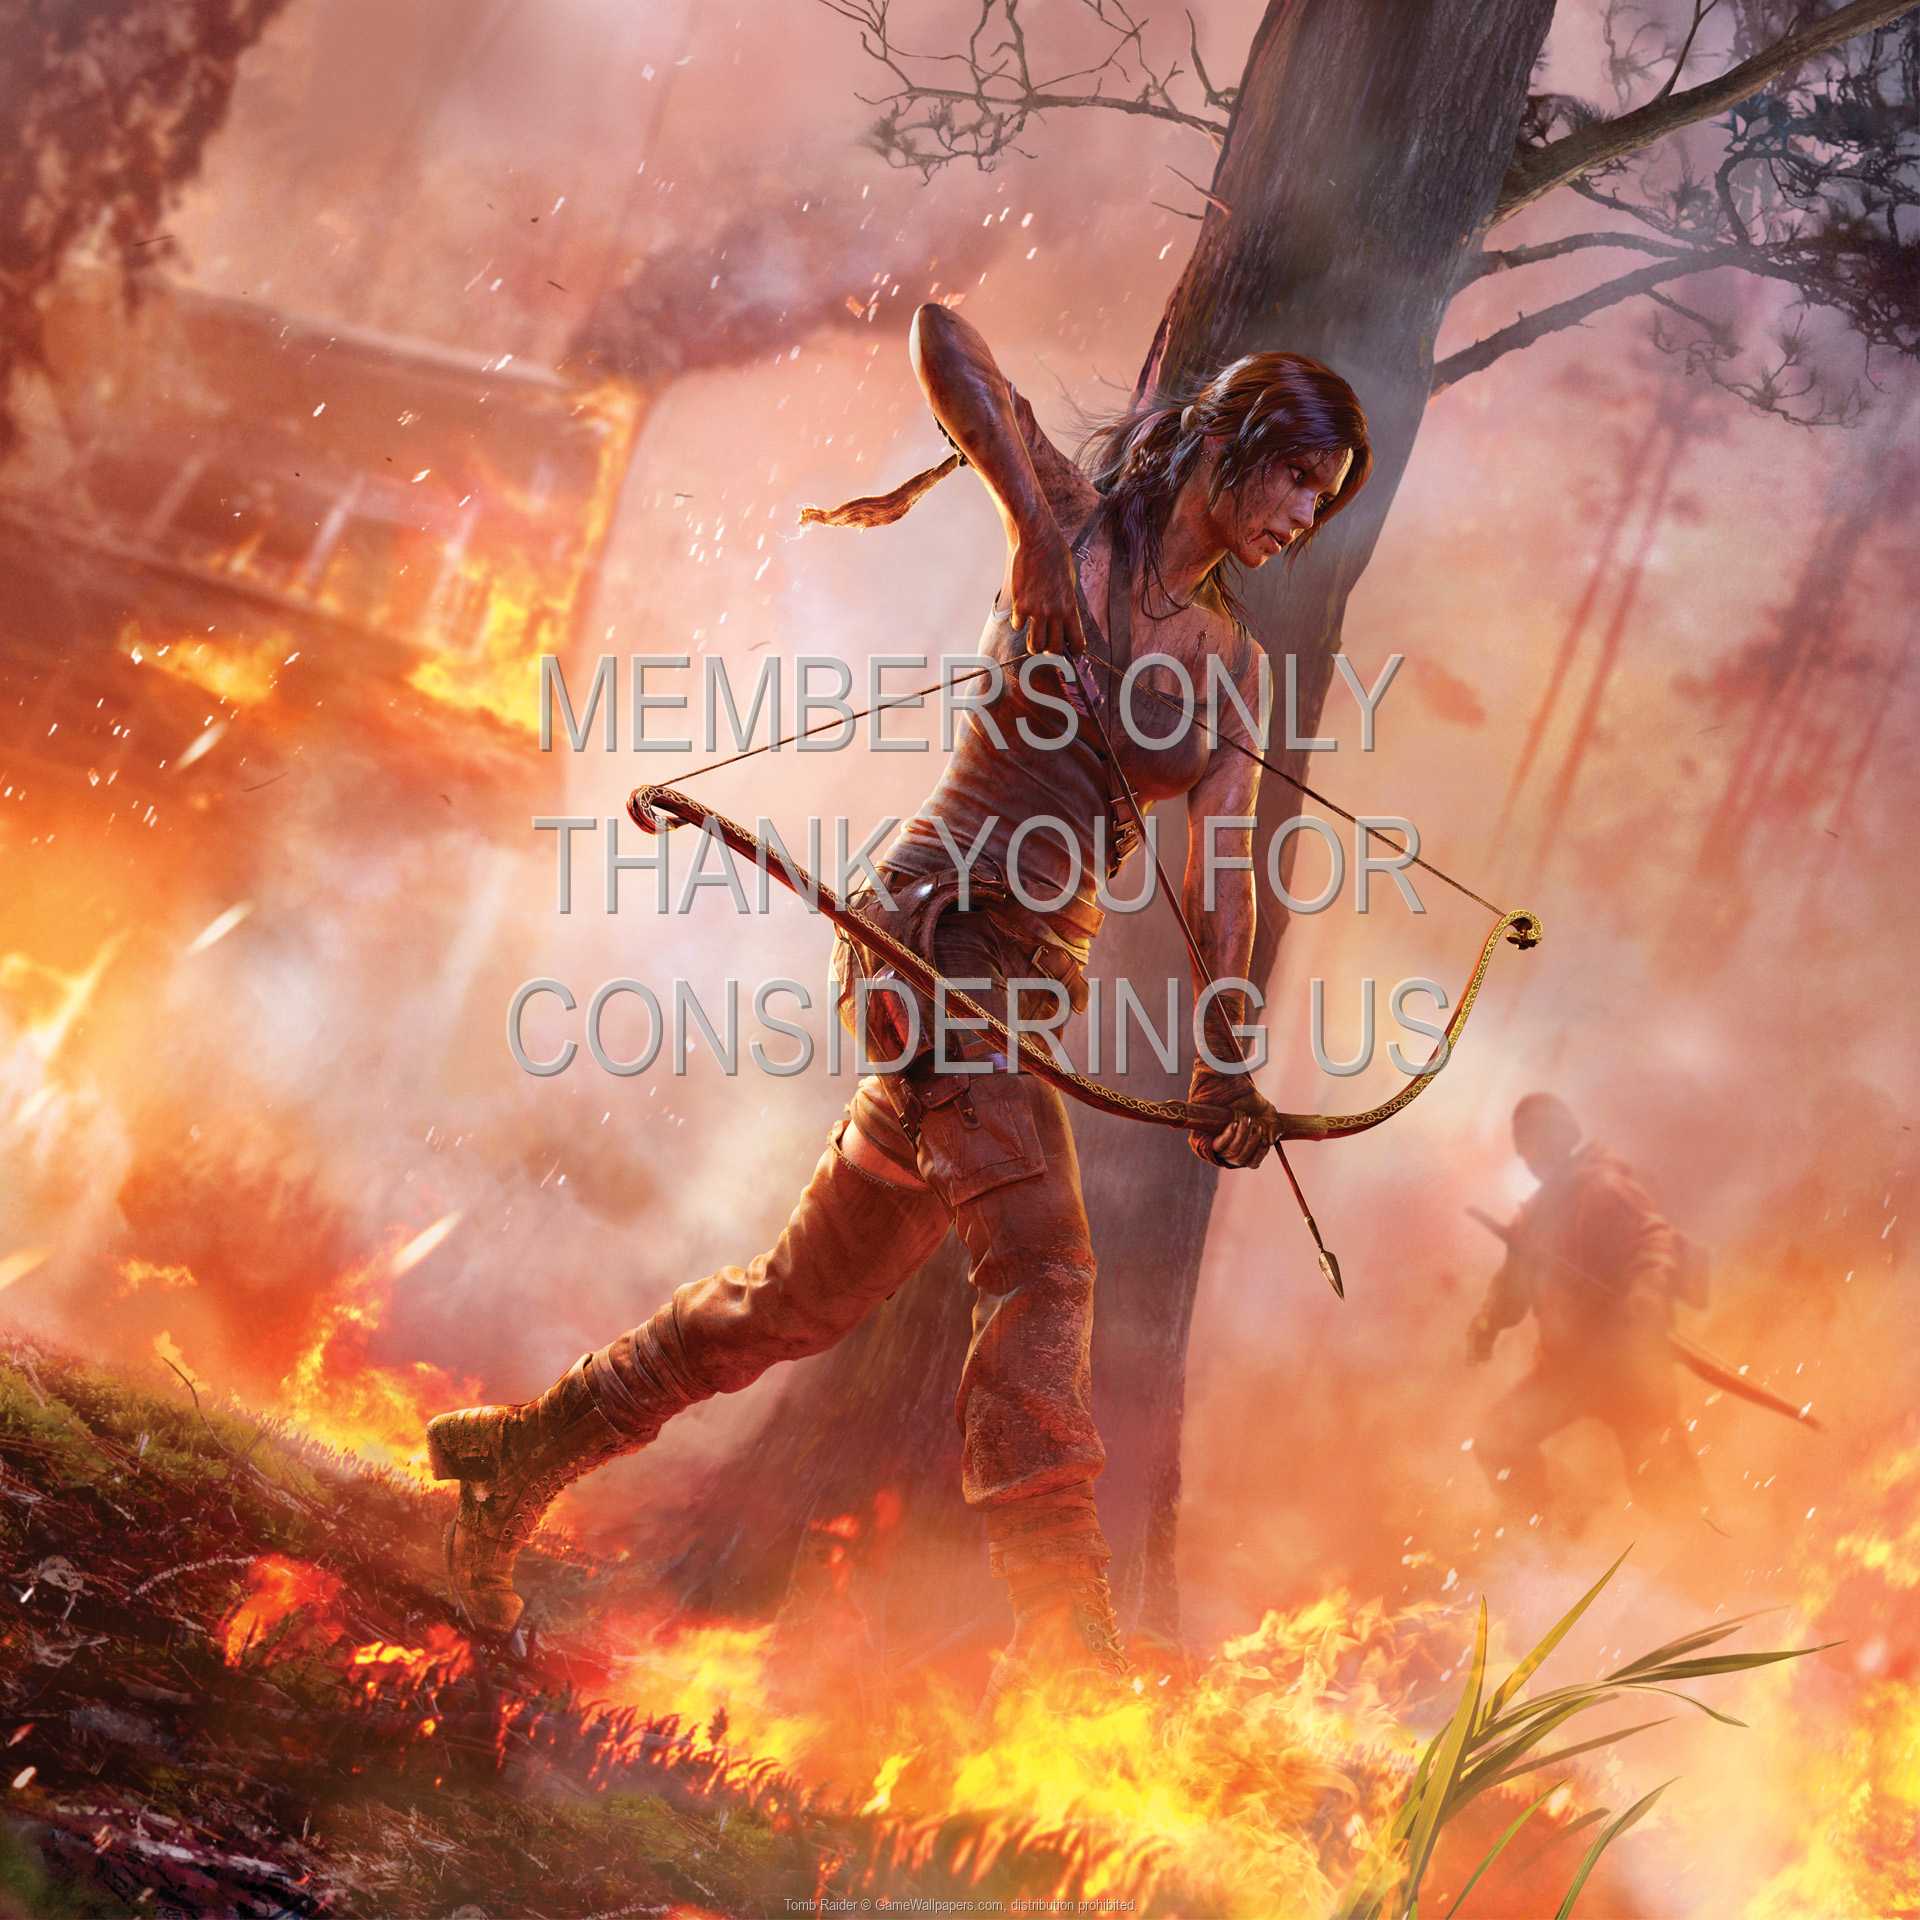 Tomb Raider 1080p%20Horizontal Mobile wallpaper or background 04